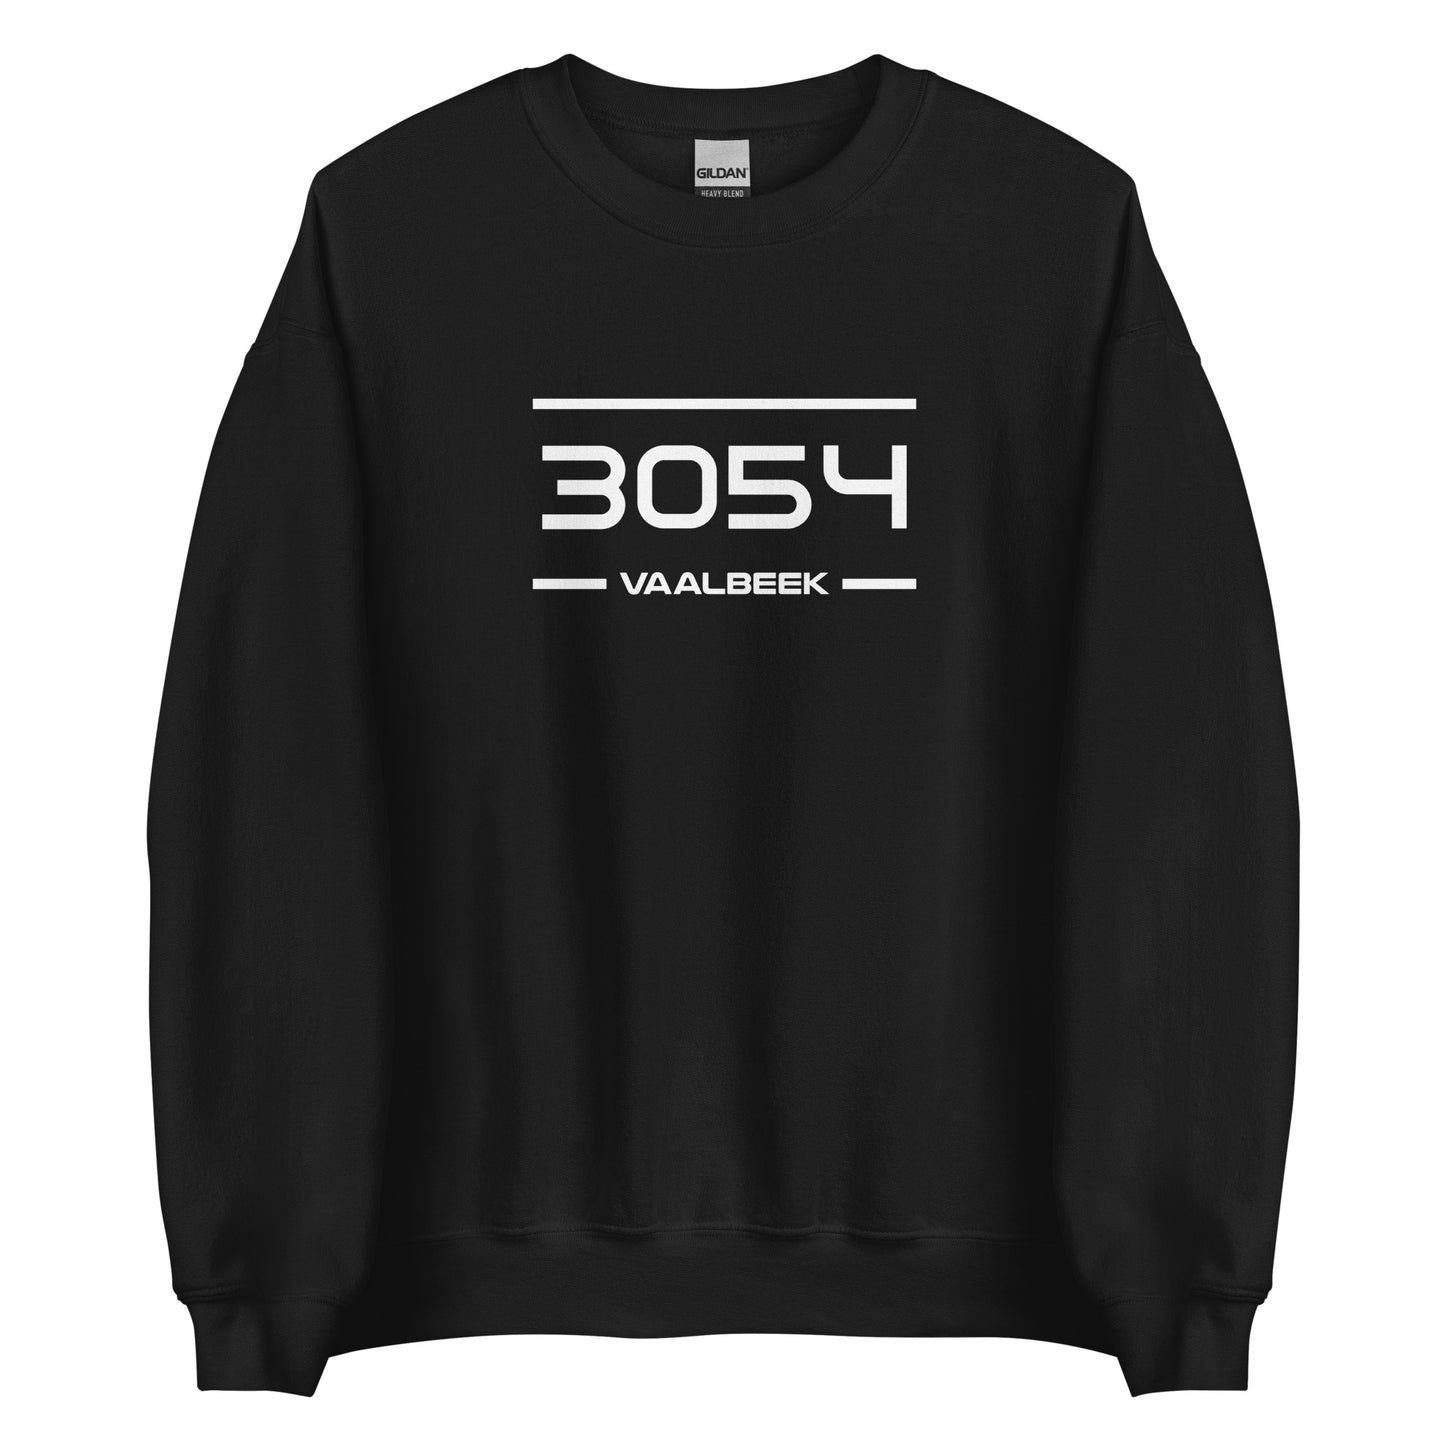 Sweater - 3054 - Vaalbeek (M/V)